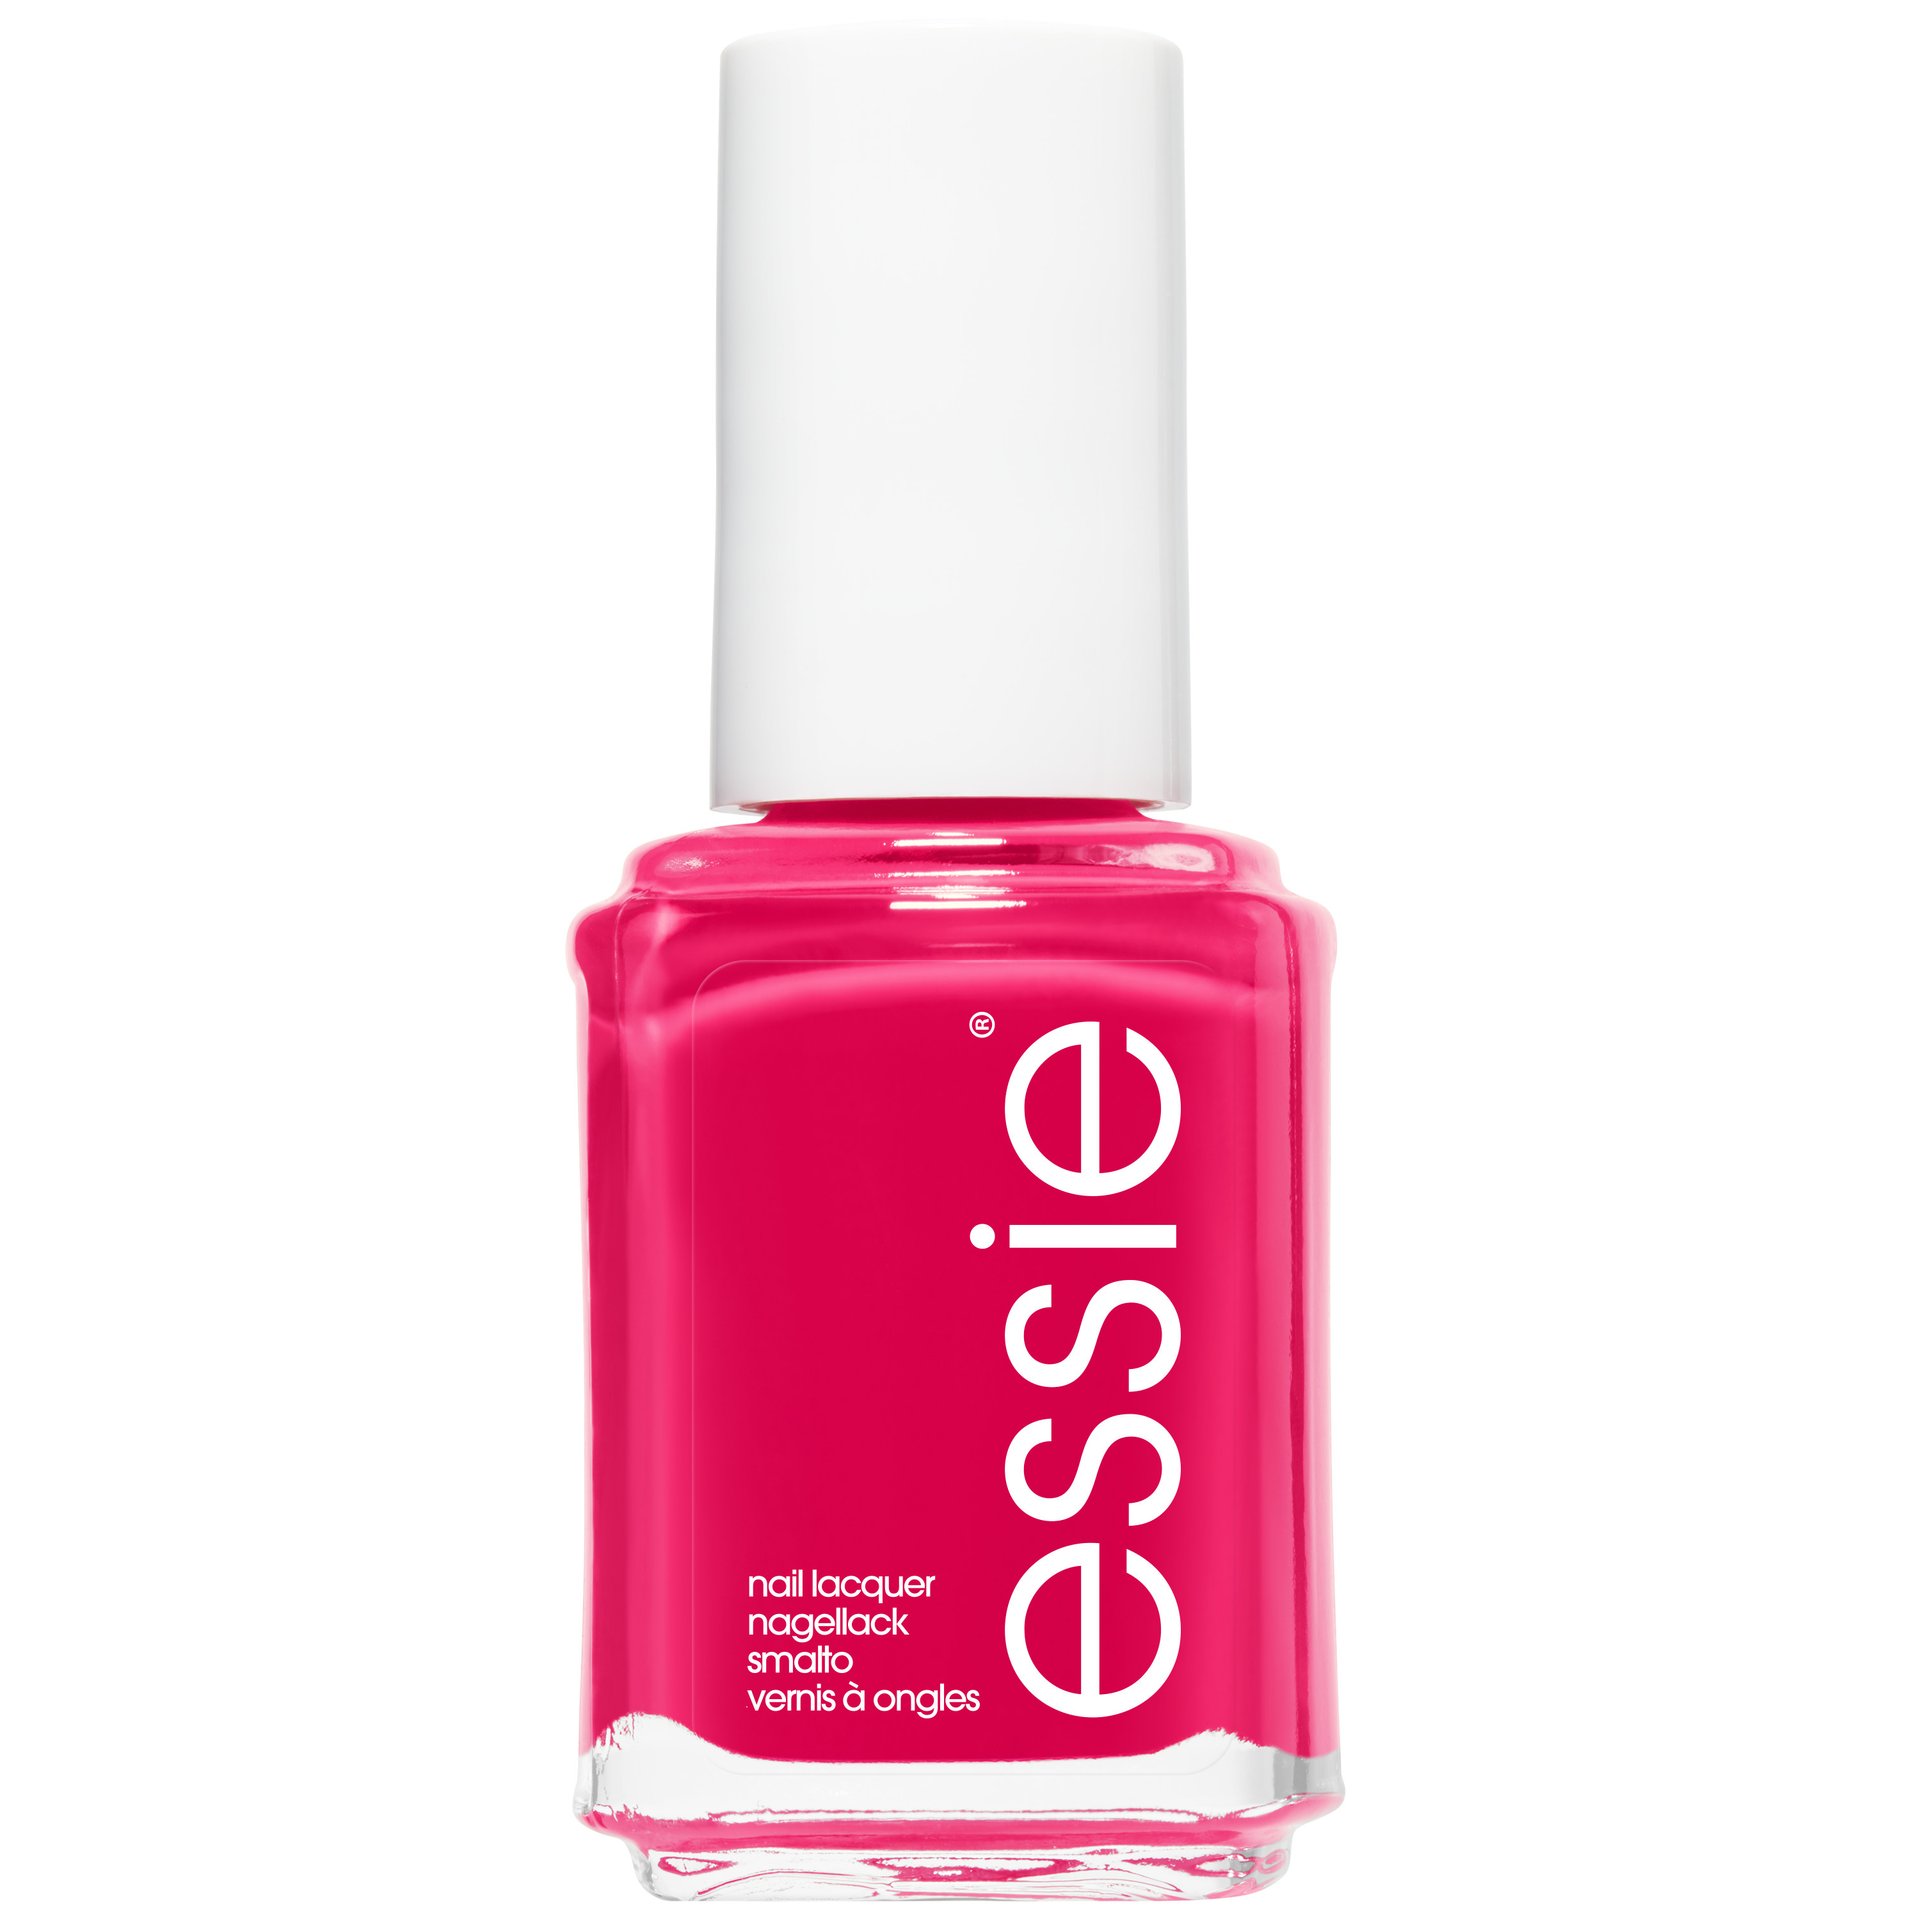 watermelon - pink nail polish - essie